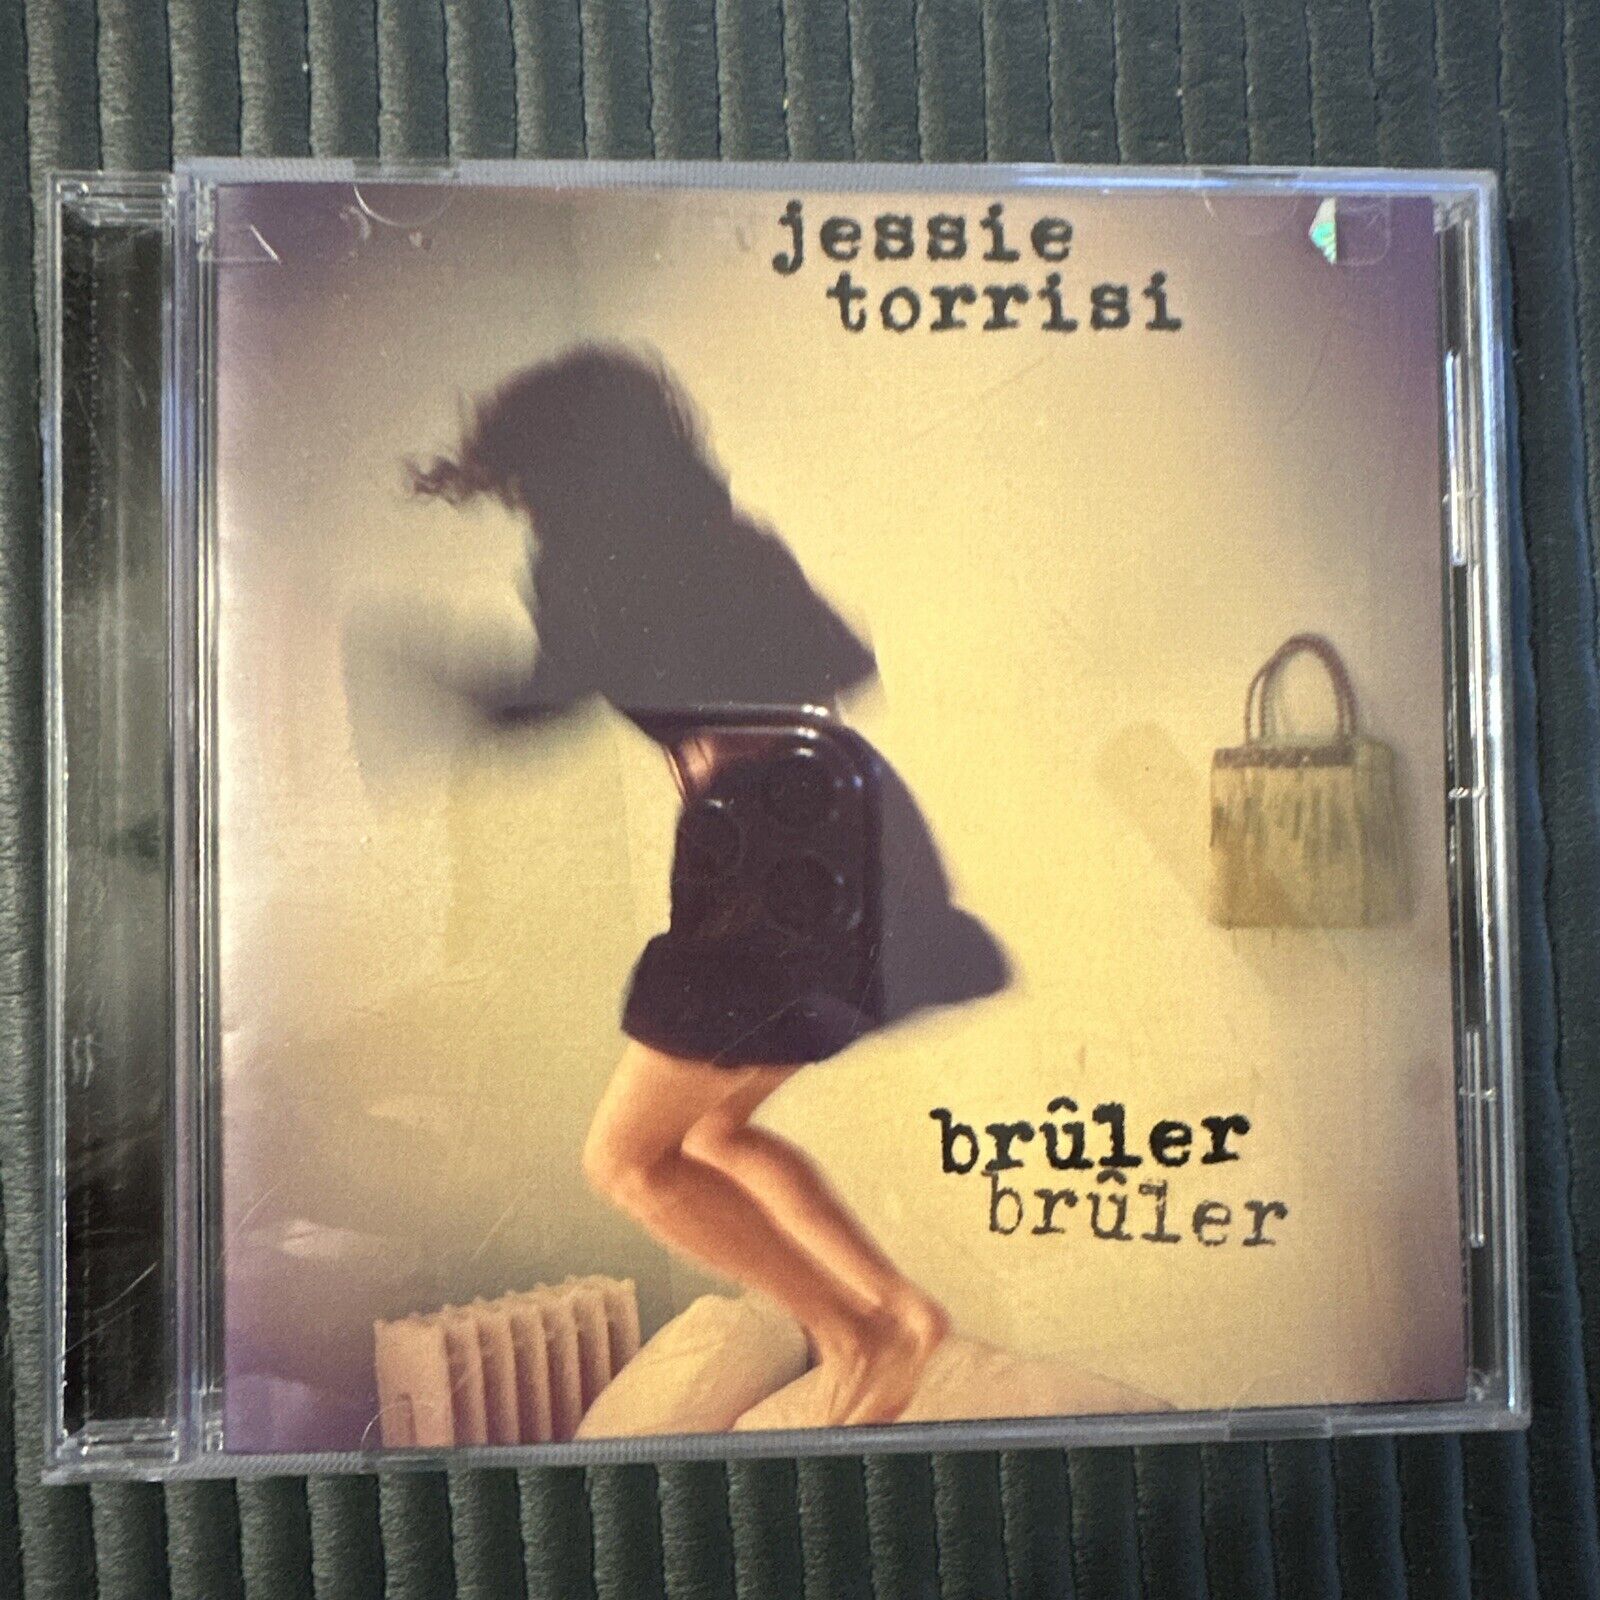 Jessie Torrisi & the Please, Please Me - Bruler Bruler (Audio CD)